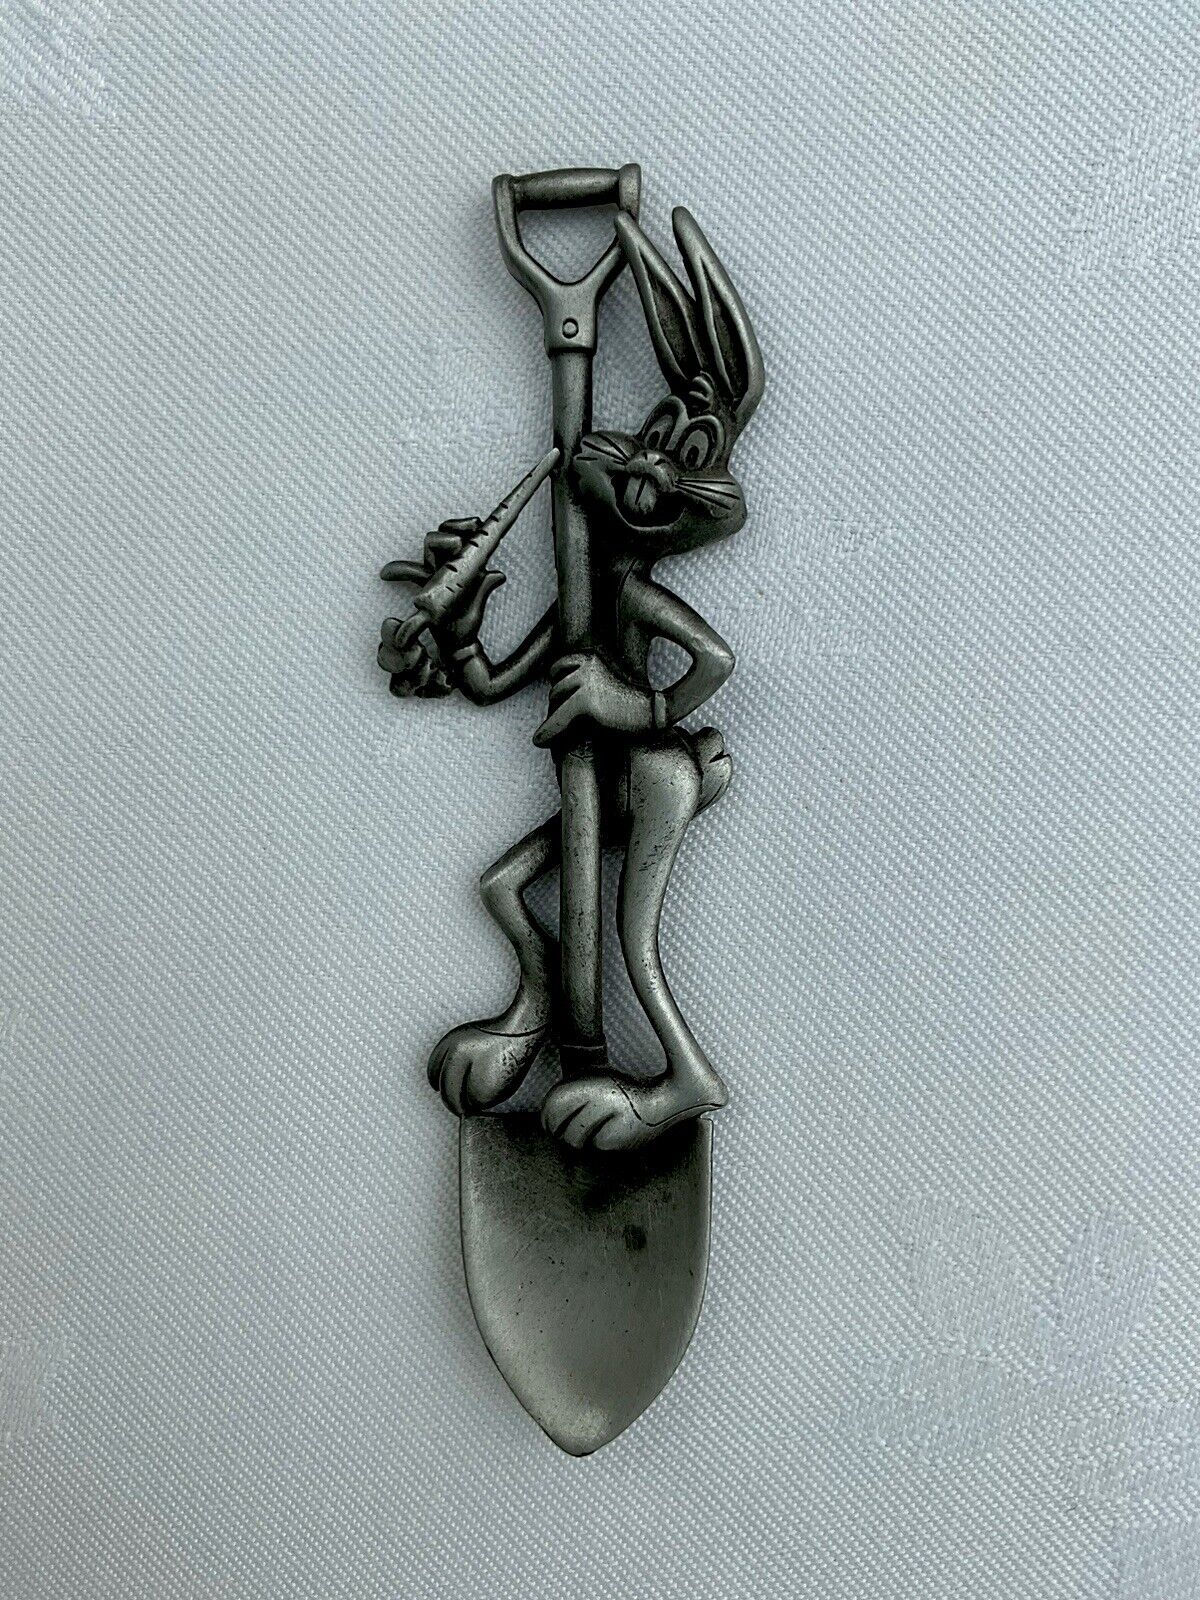 Great America Warner Bros. Bugs Bunny Solid Pewter Spoon